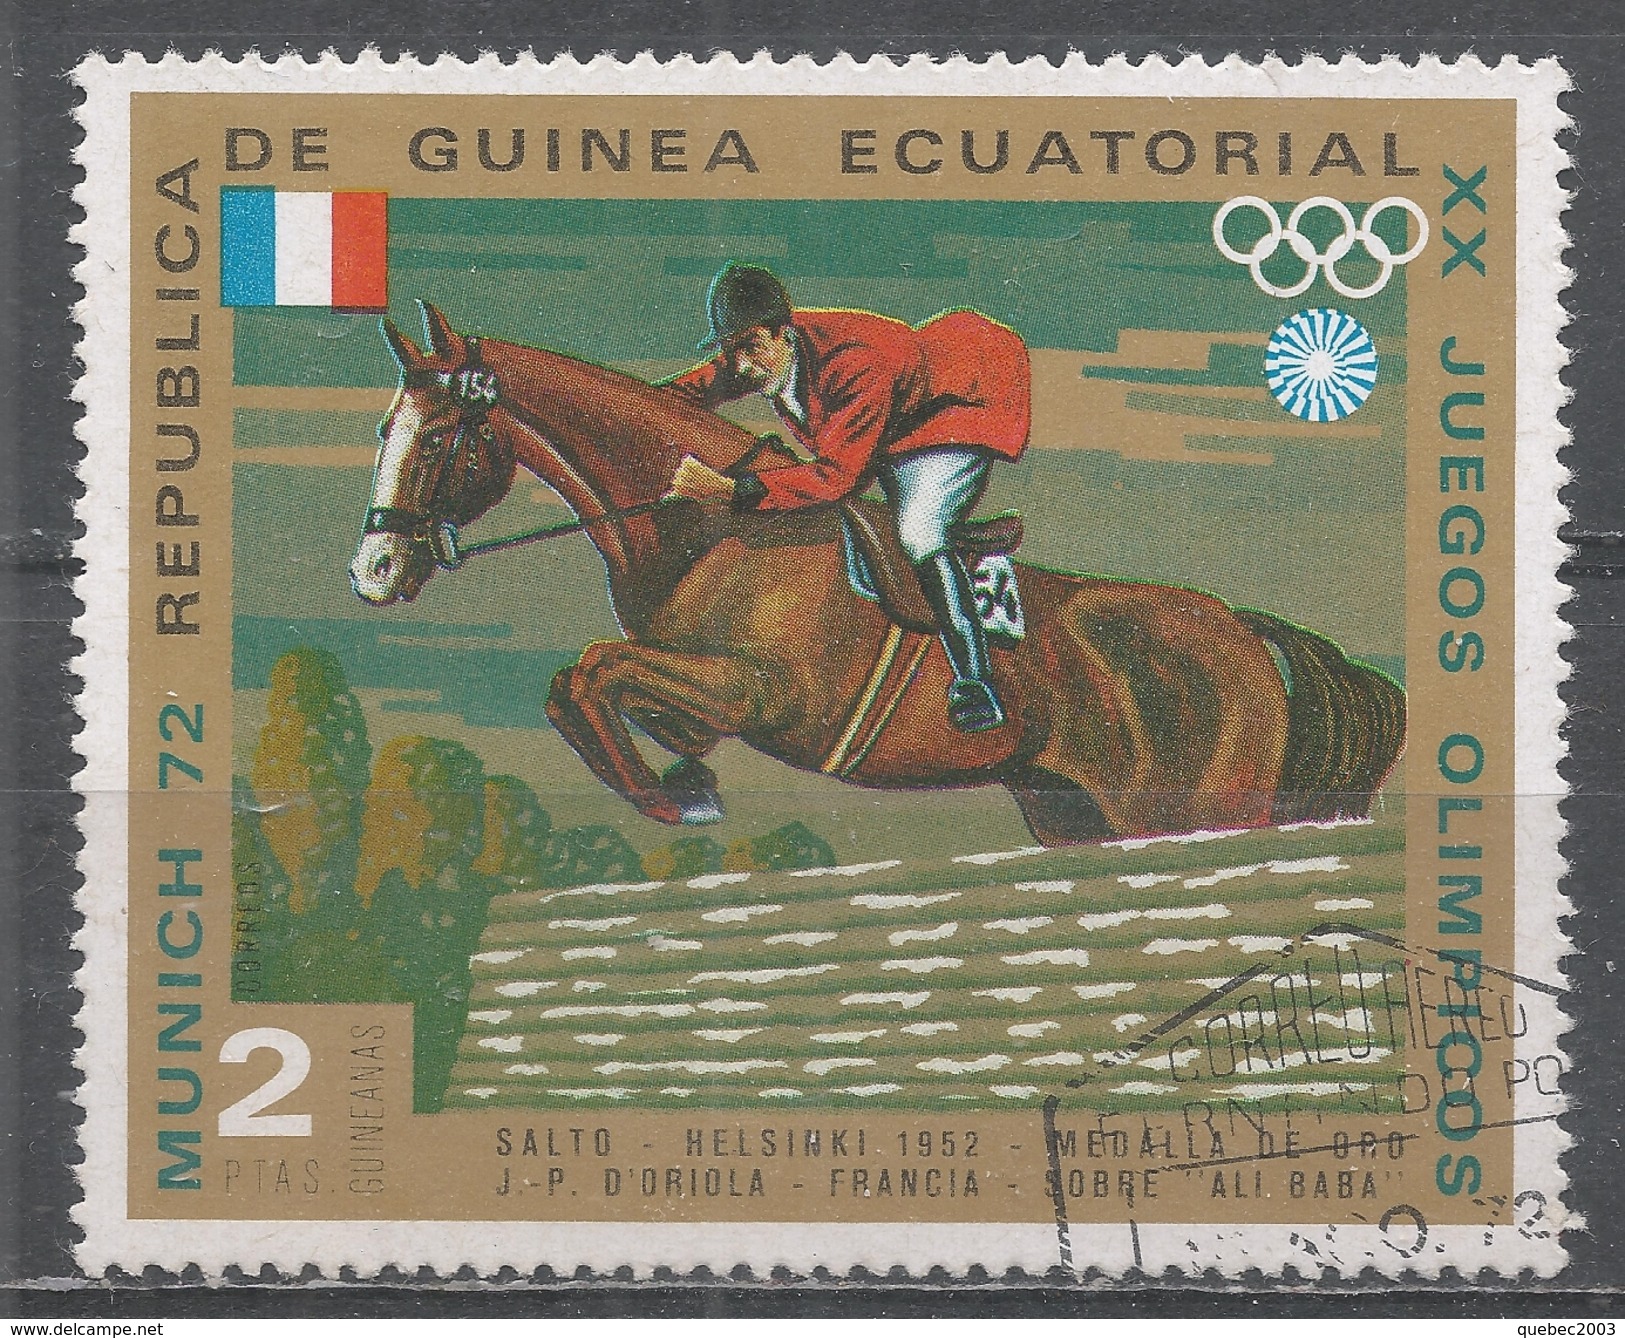 Equatorial Guinea 1972. Scott #72147 (U) J-P D'oriola And ''Ali Baba'' (FRA), Helsink1 1952, Gold Medal - Equatoriaal Guinea